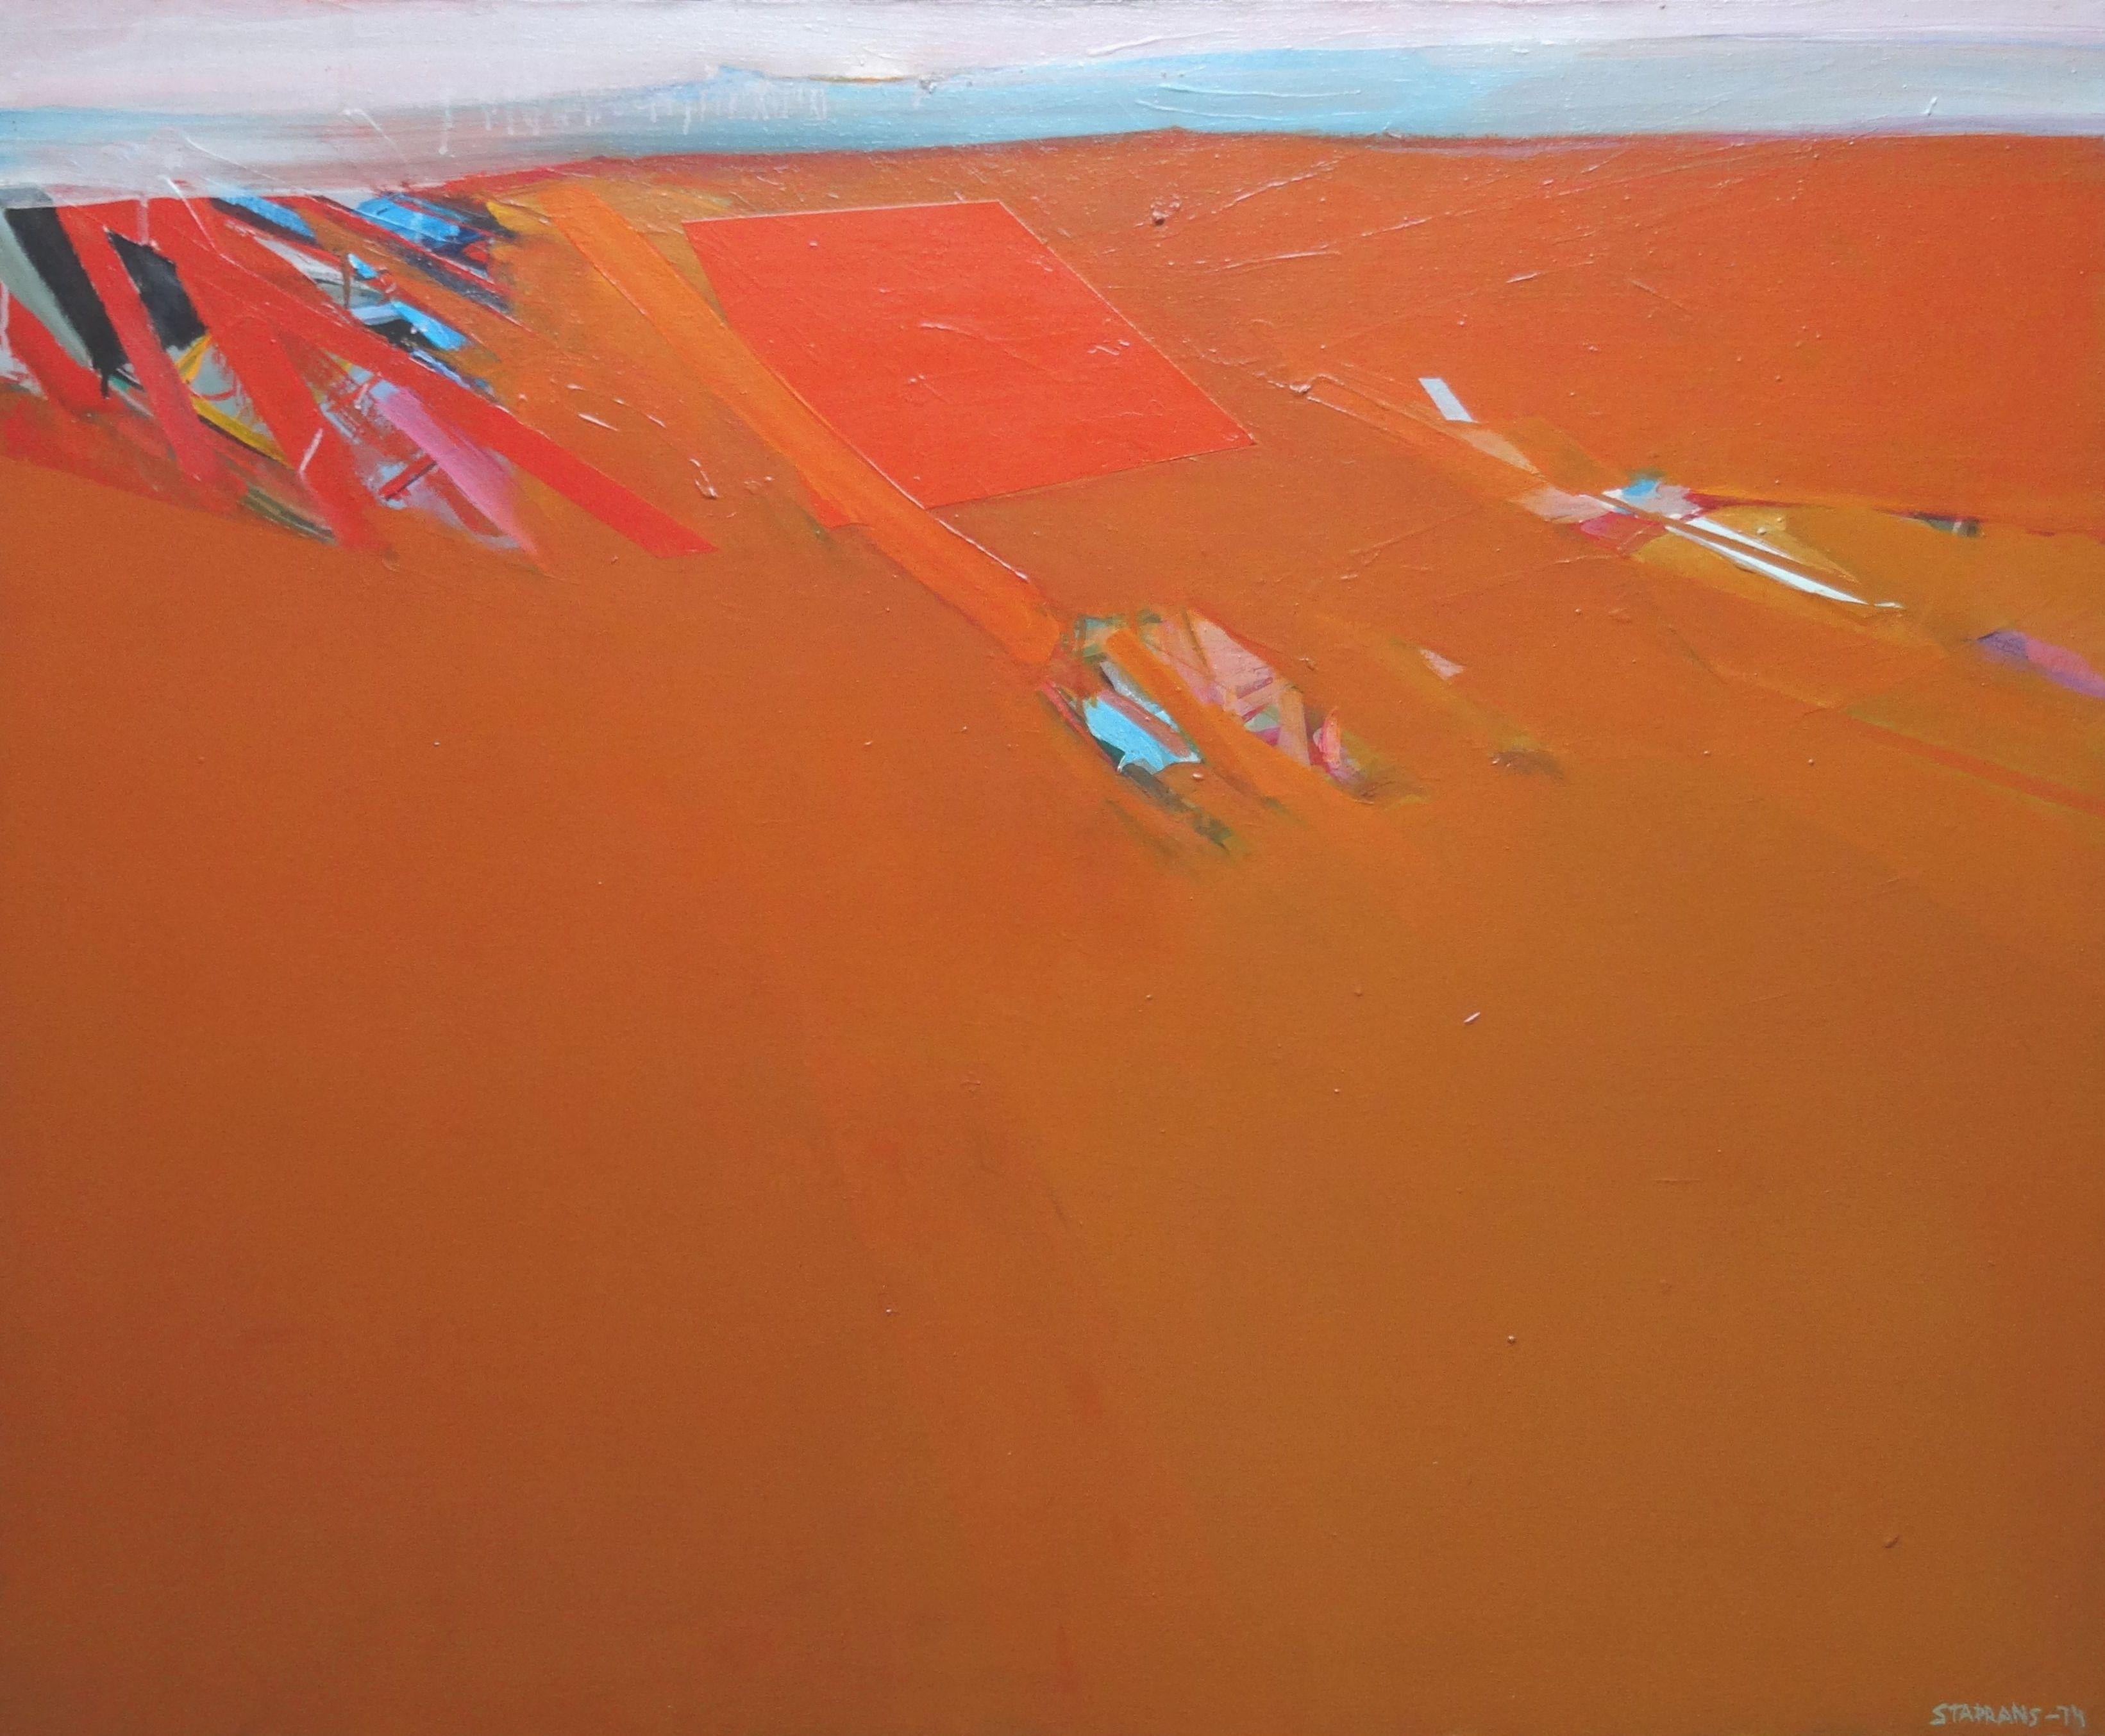 Raimonds Staprans – Wüste. 1974, Öl auf Leinwand, 95,5x116 cm